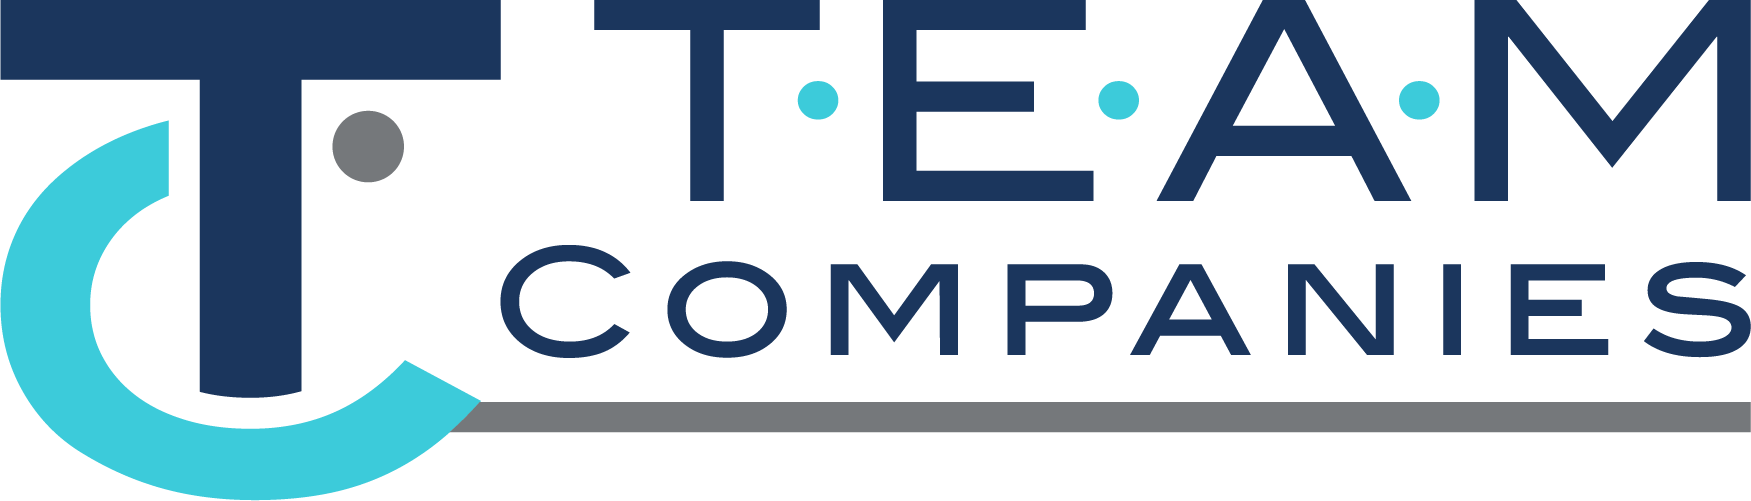 TEAM Professional Services Companies logo